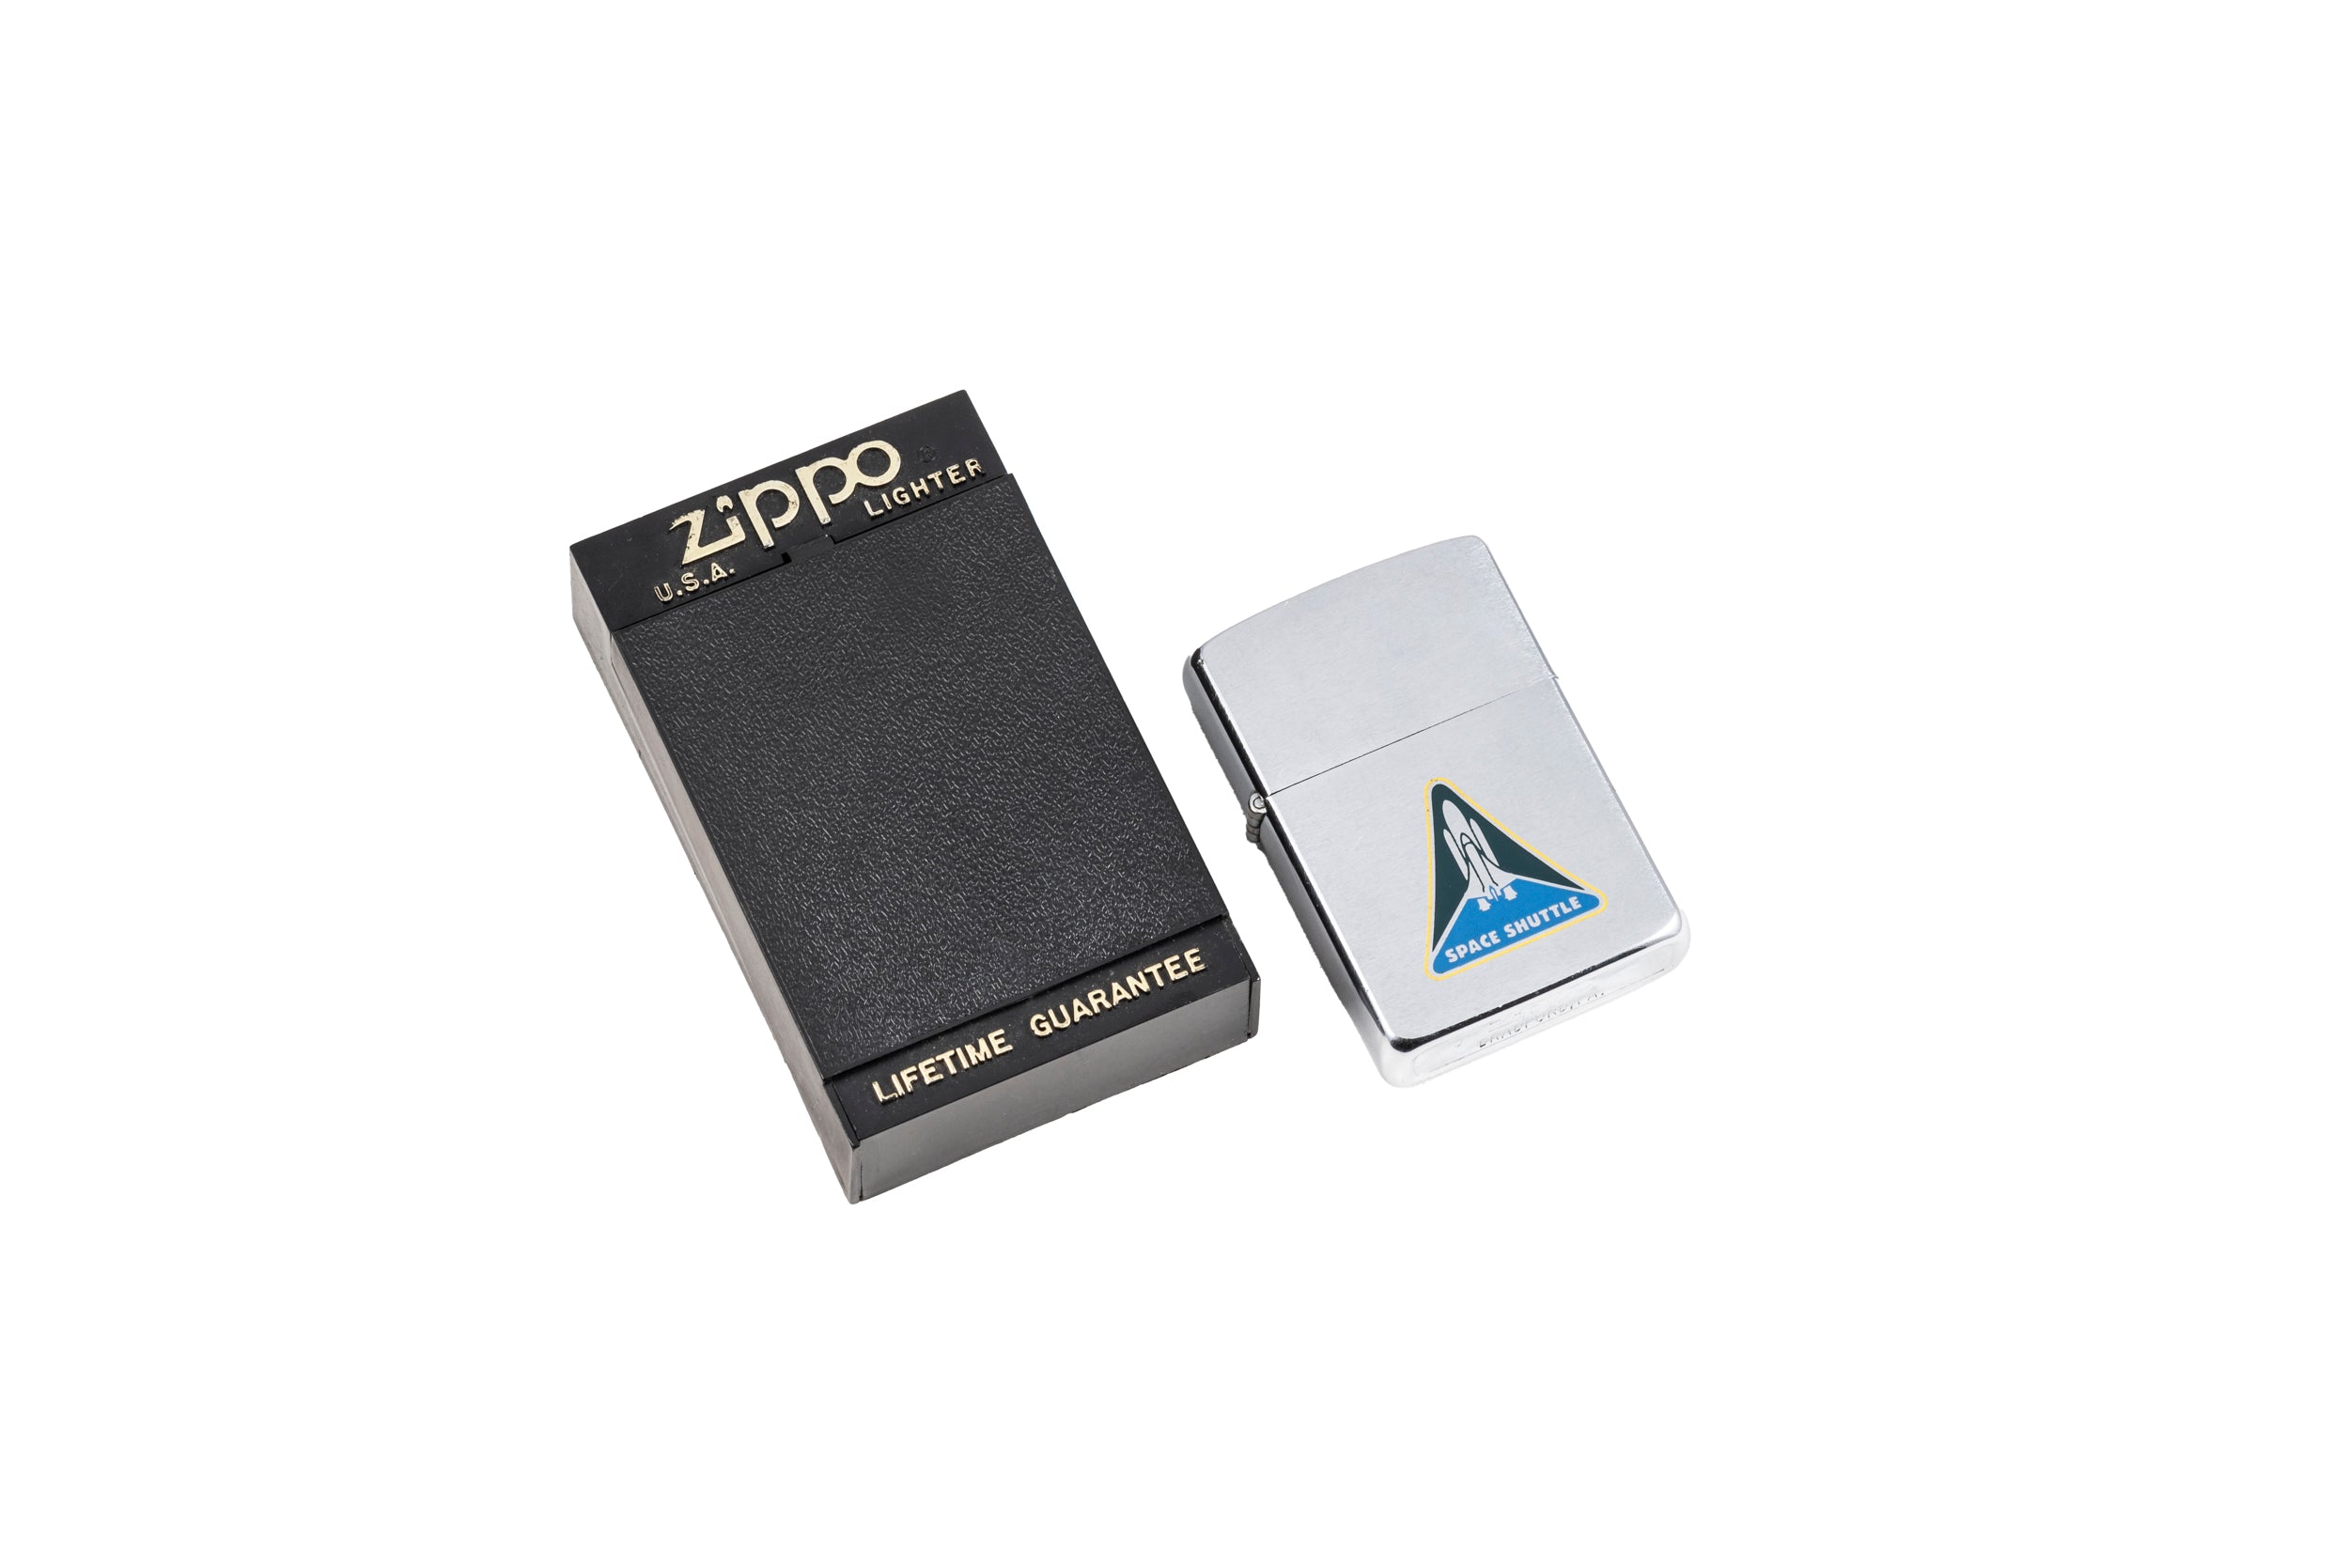 Zippo Windproof Lighter 'Space Shuttle' – Analog:Shift